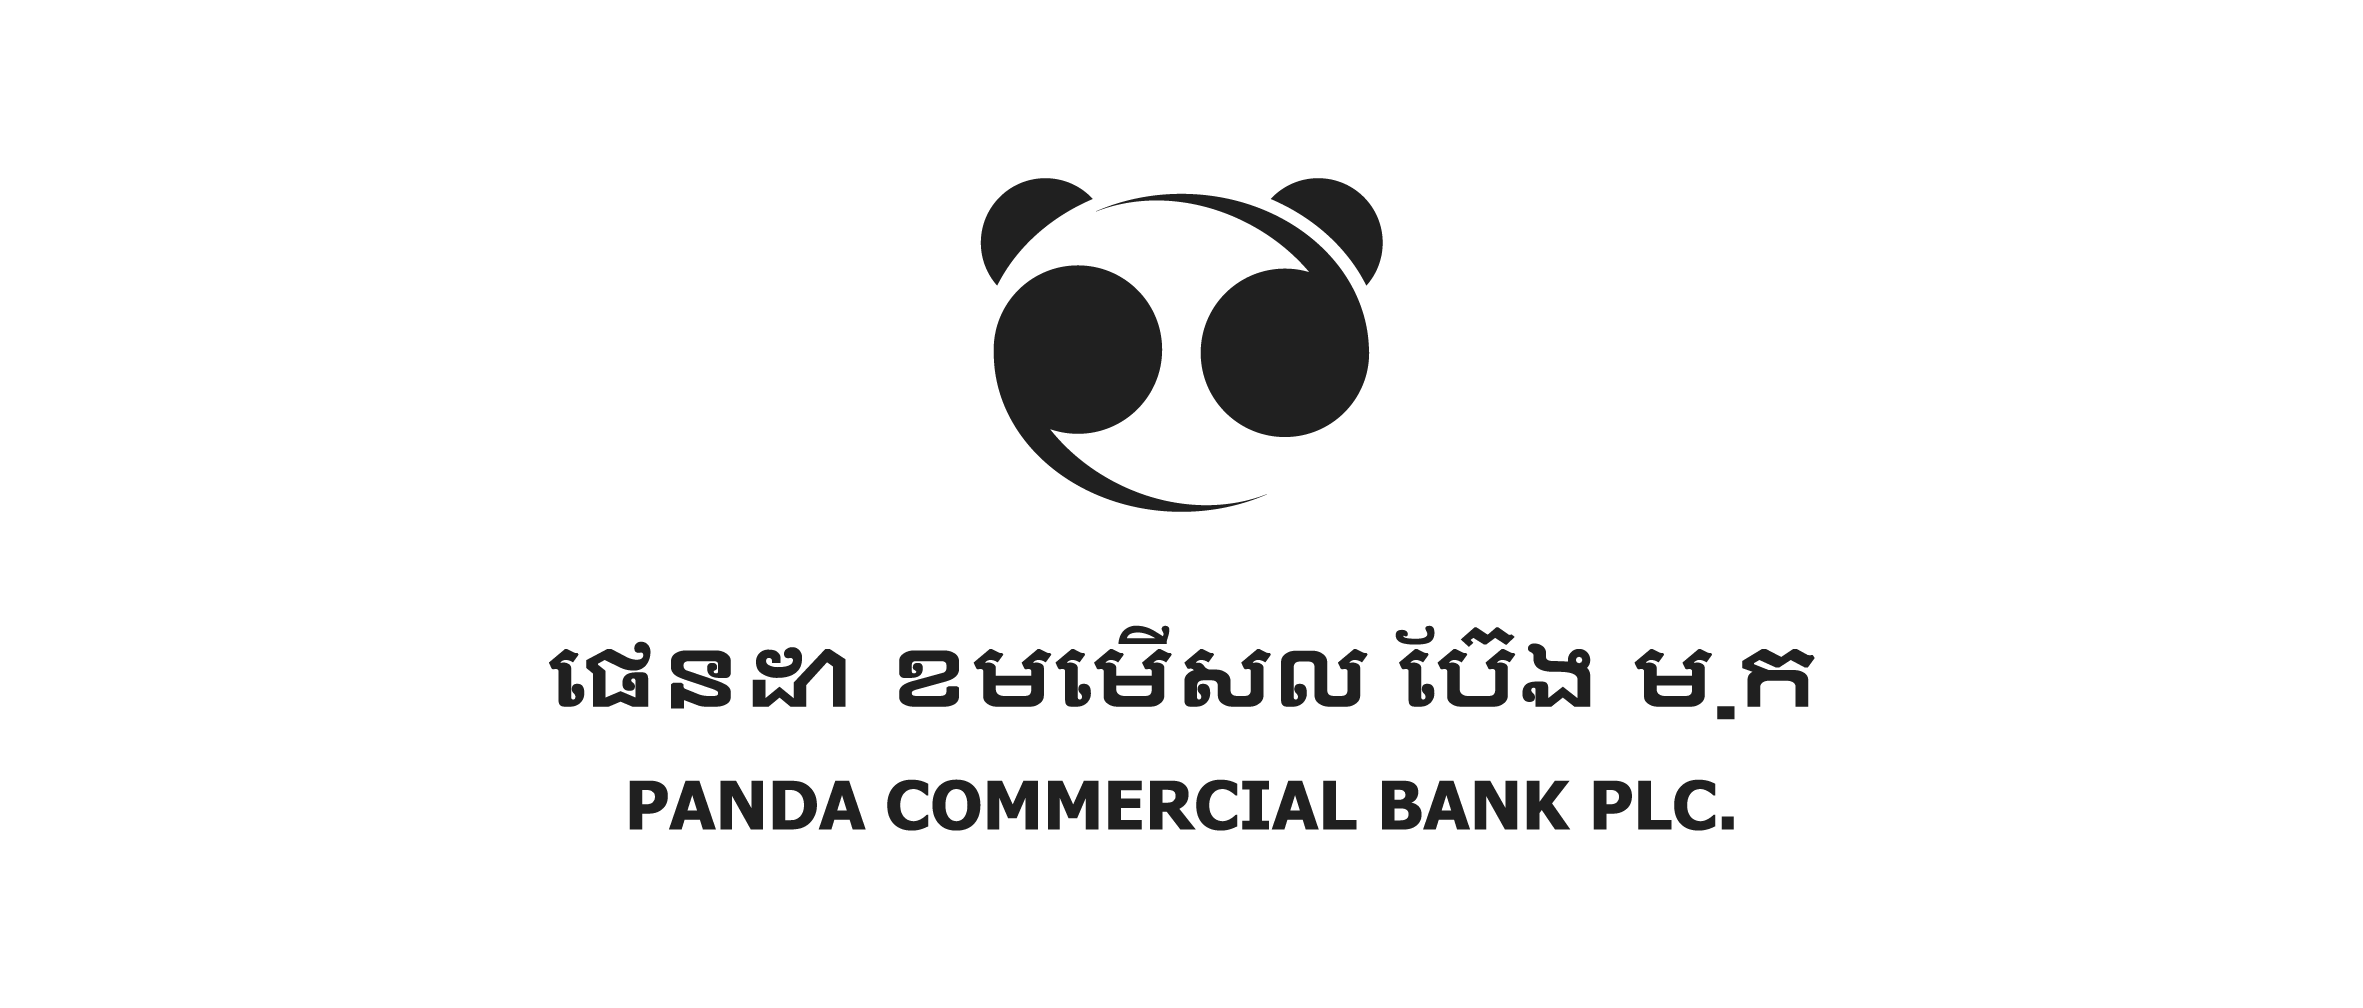 Panda Commercial Bank